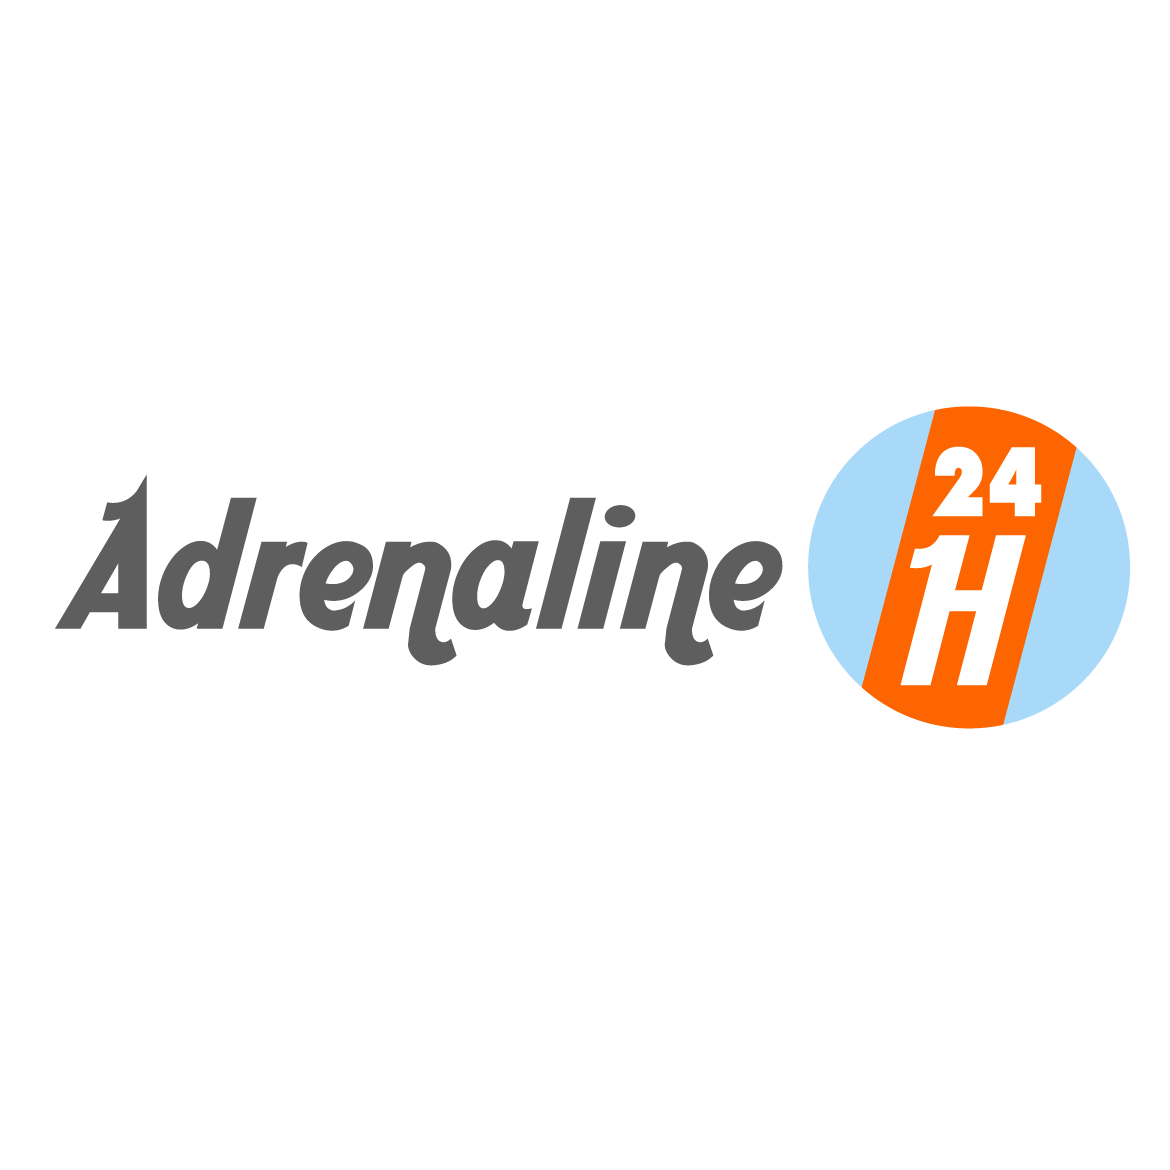 adrenaline 24h1